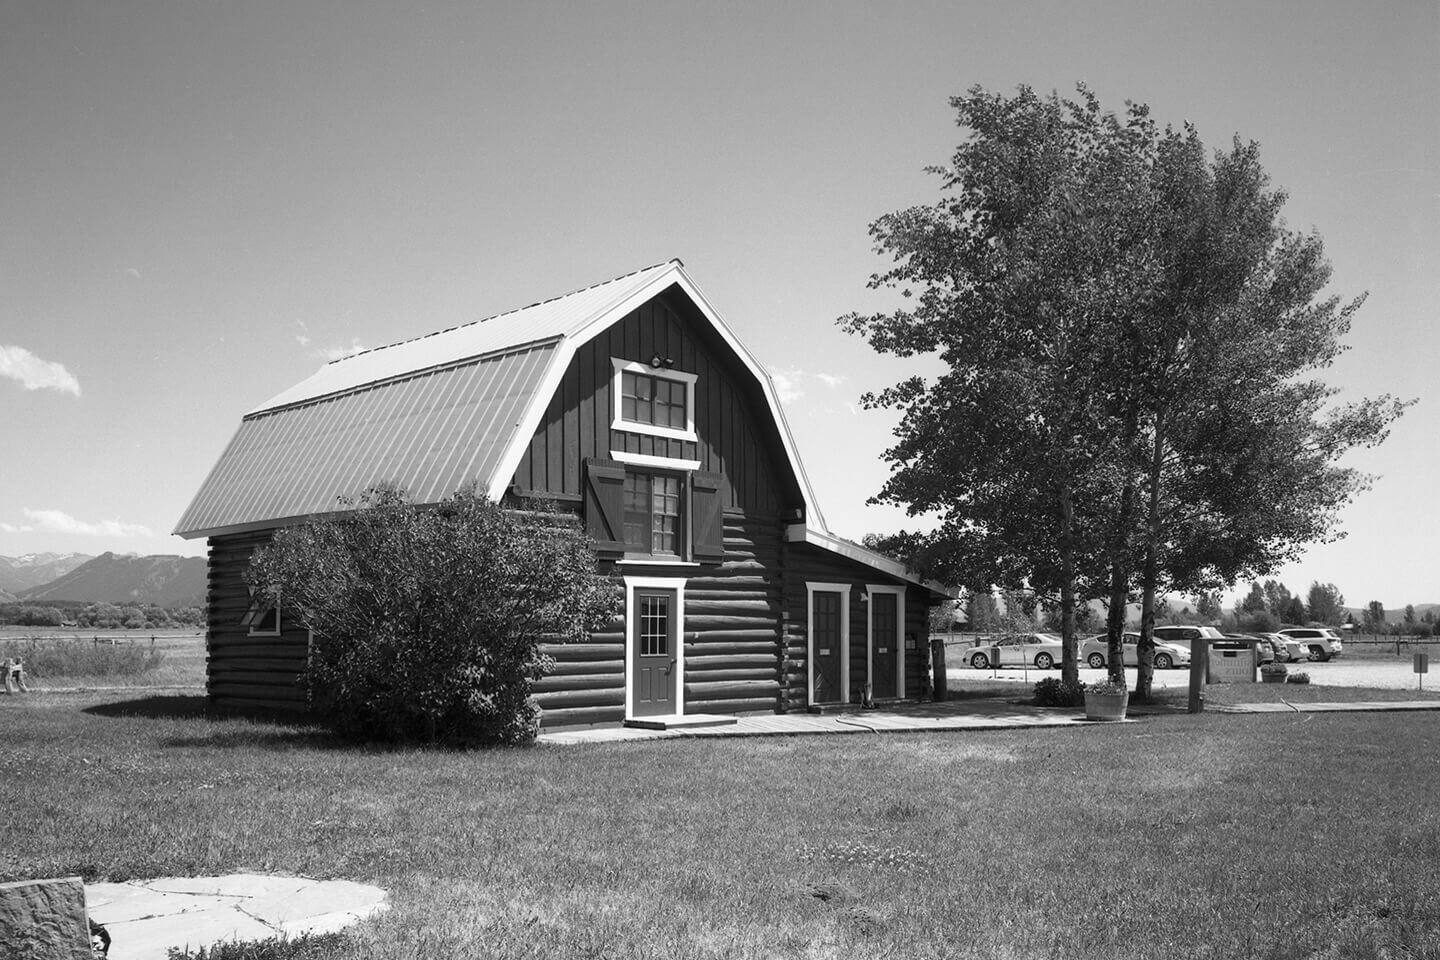 Small historical barn built circa 1930